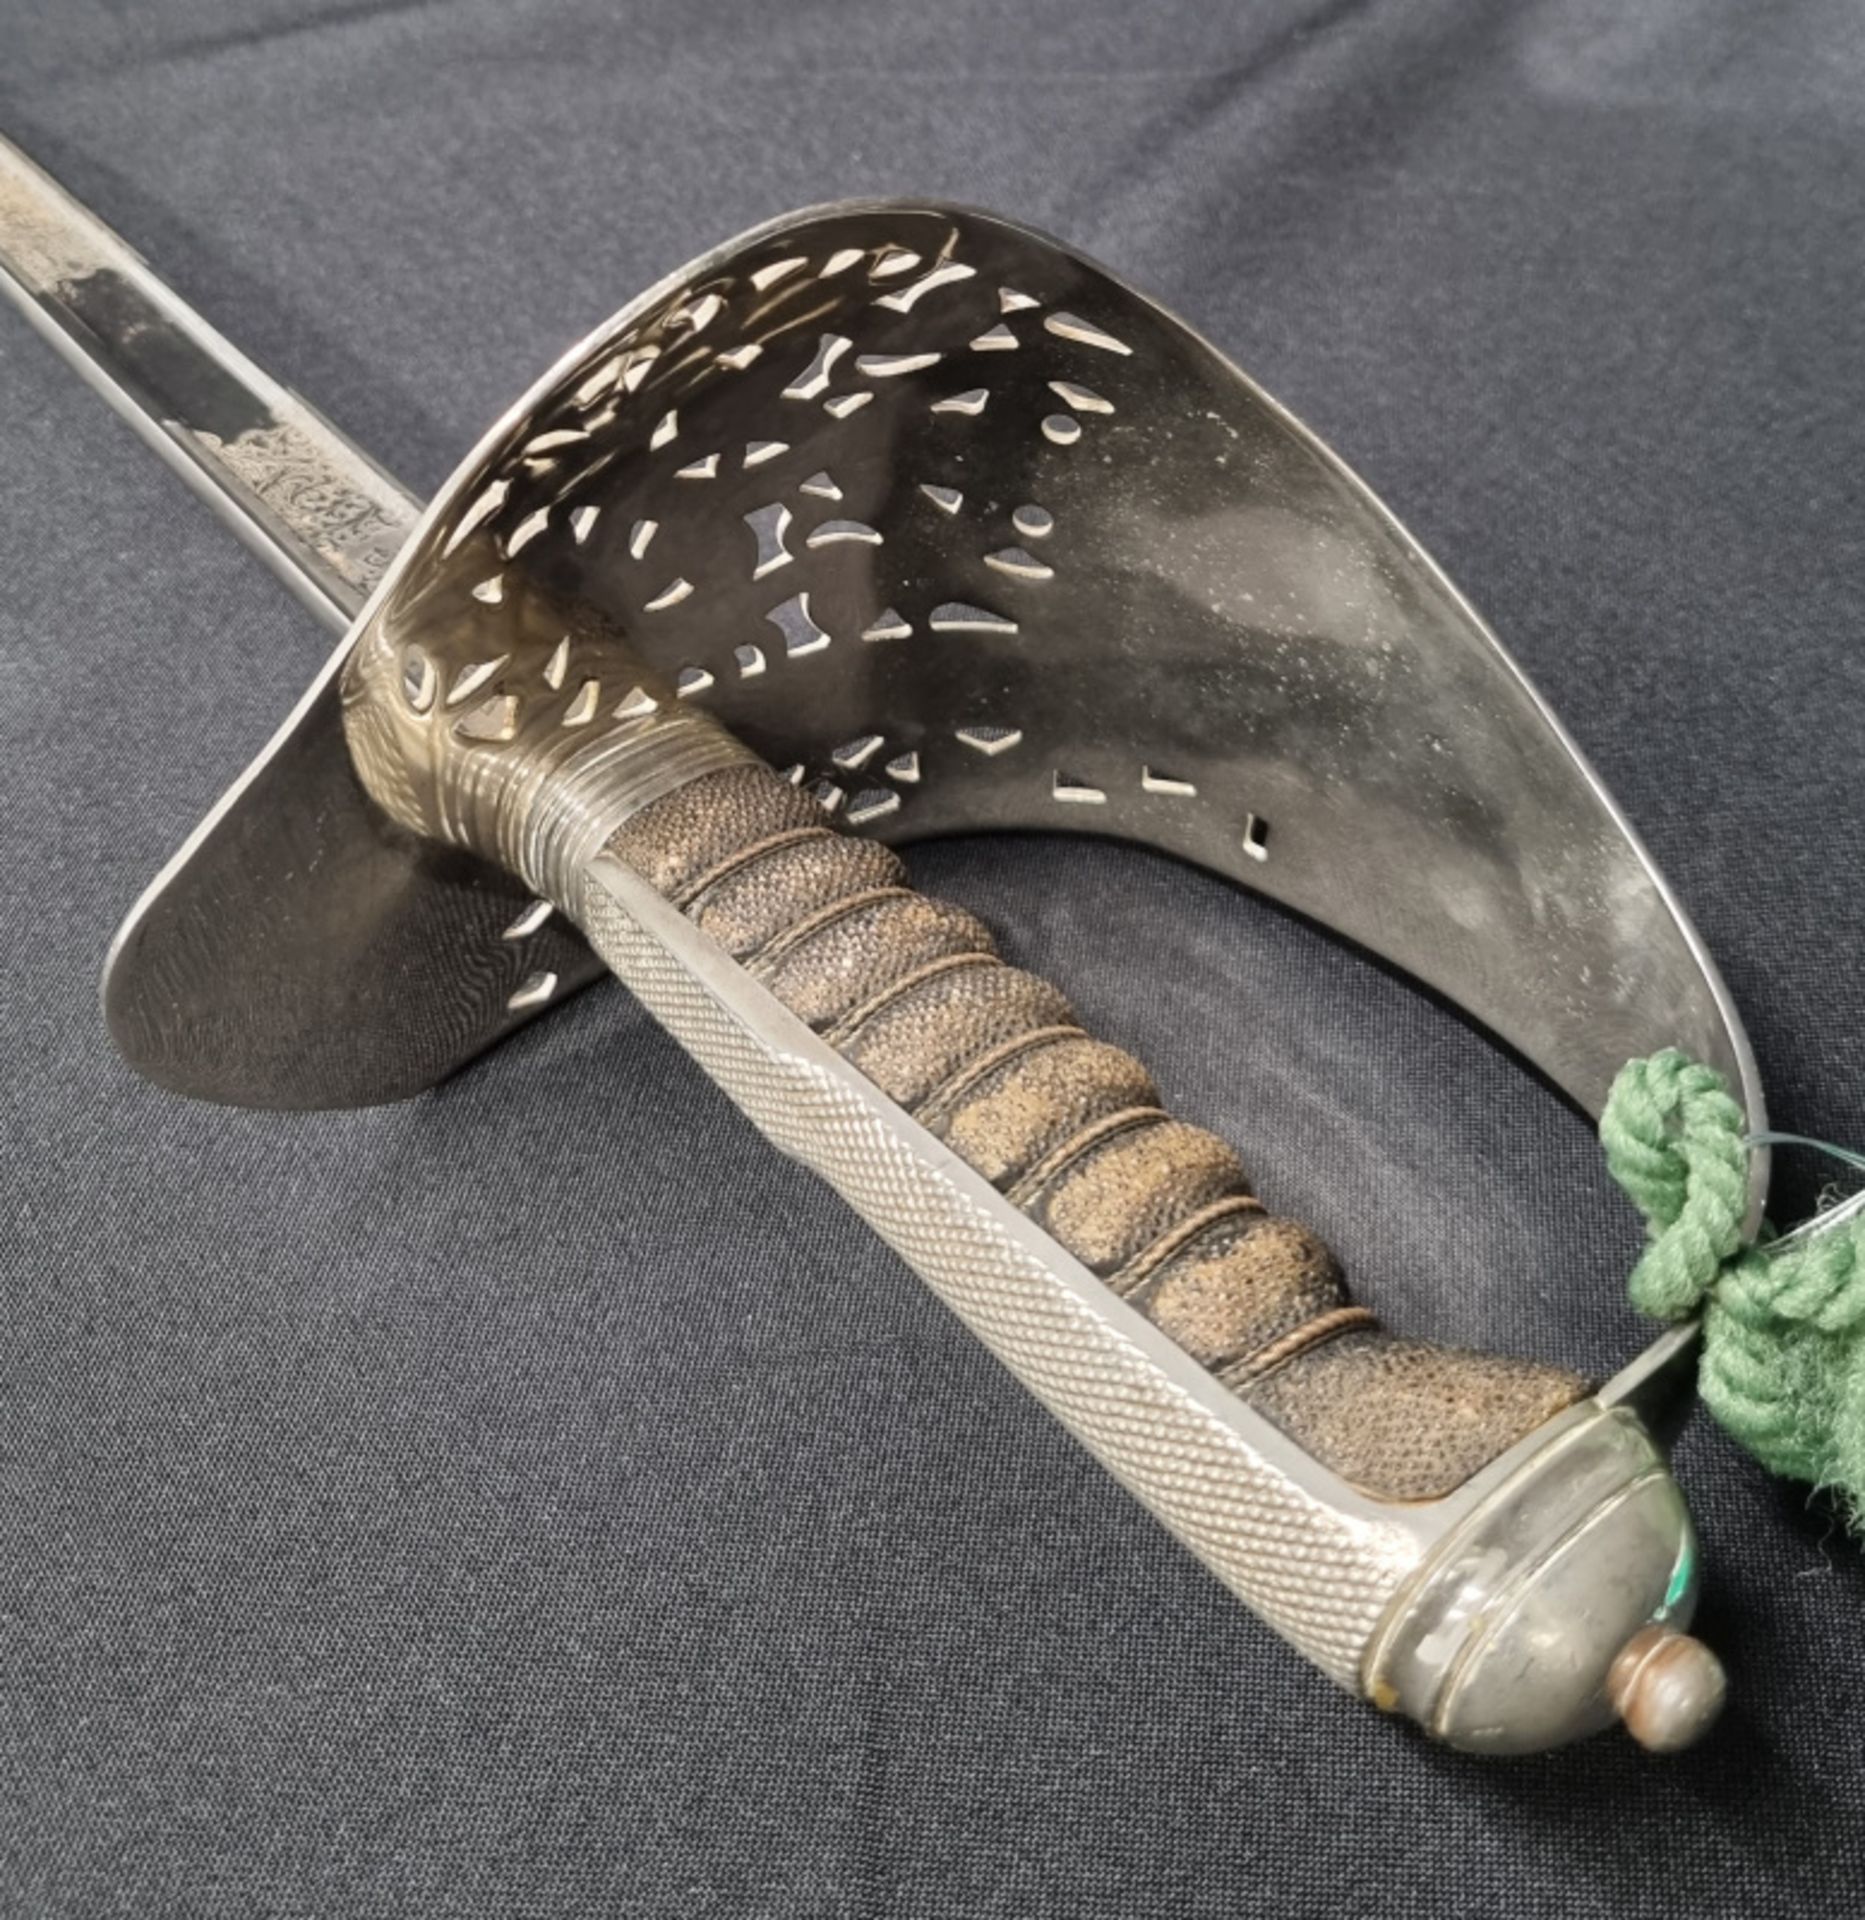 Wilkinson Sword Ltd. Ceremonial Sword - serial number 84032 - Image 10 of 11